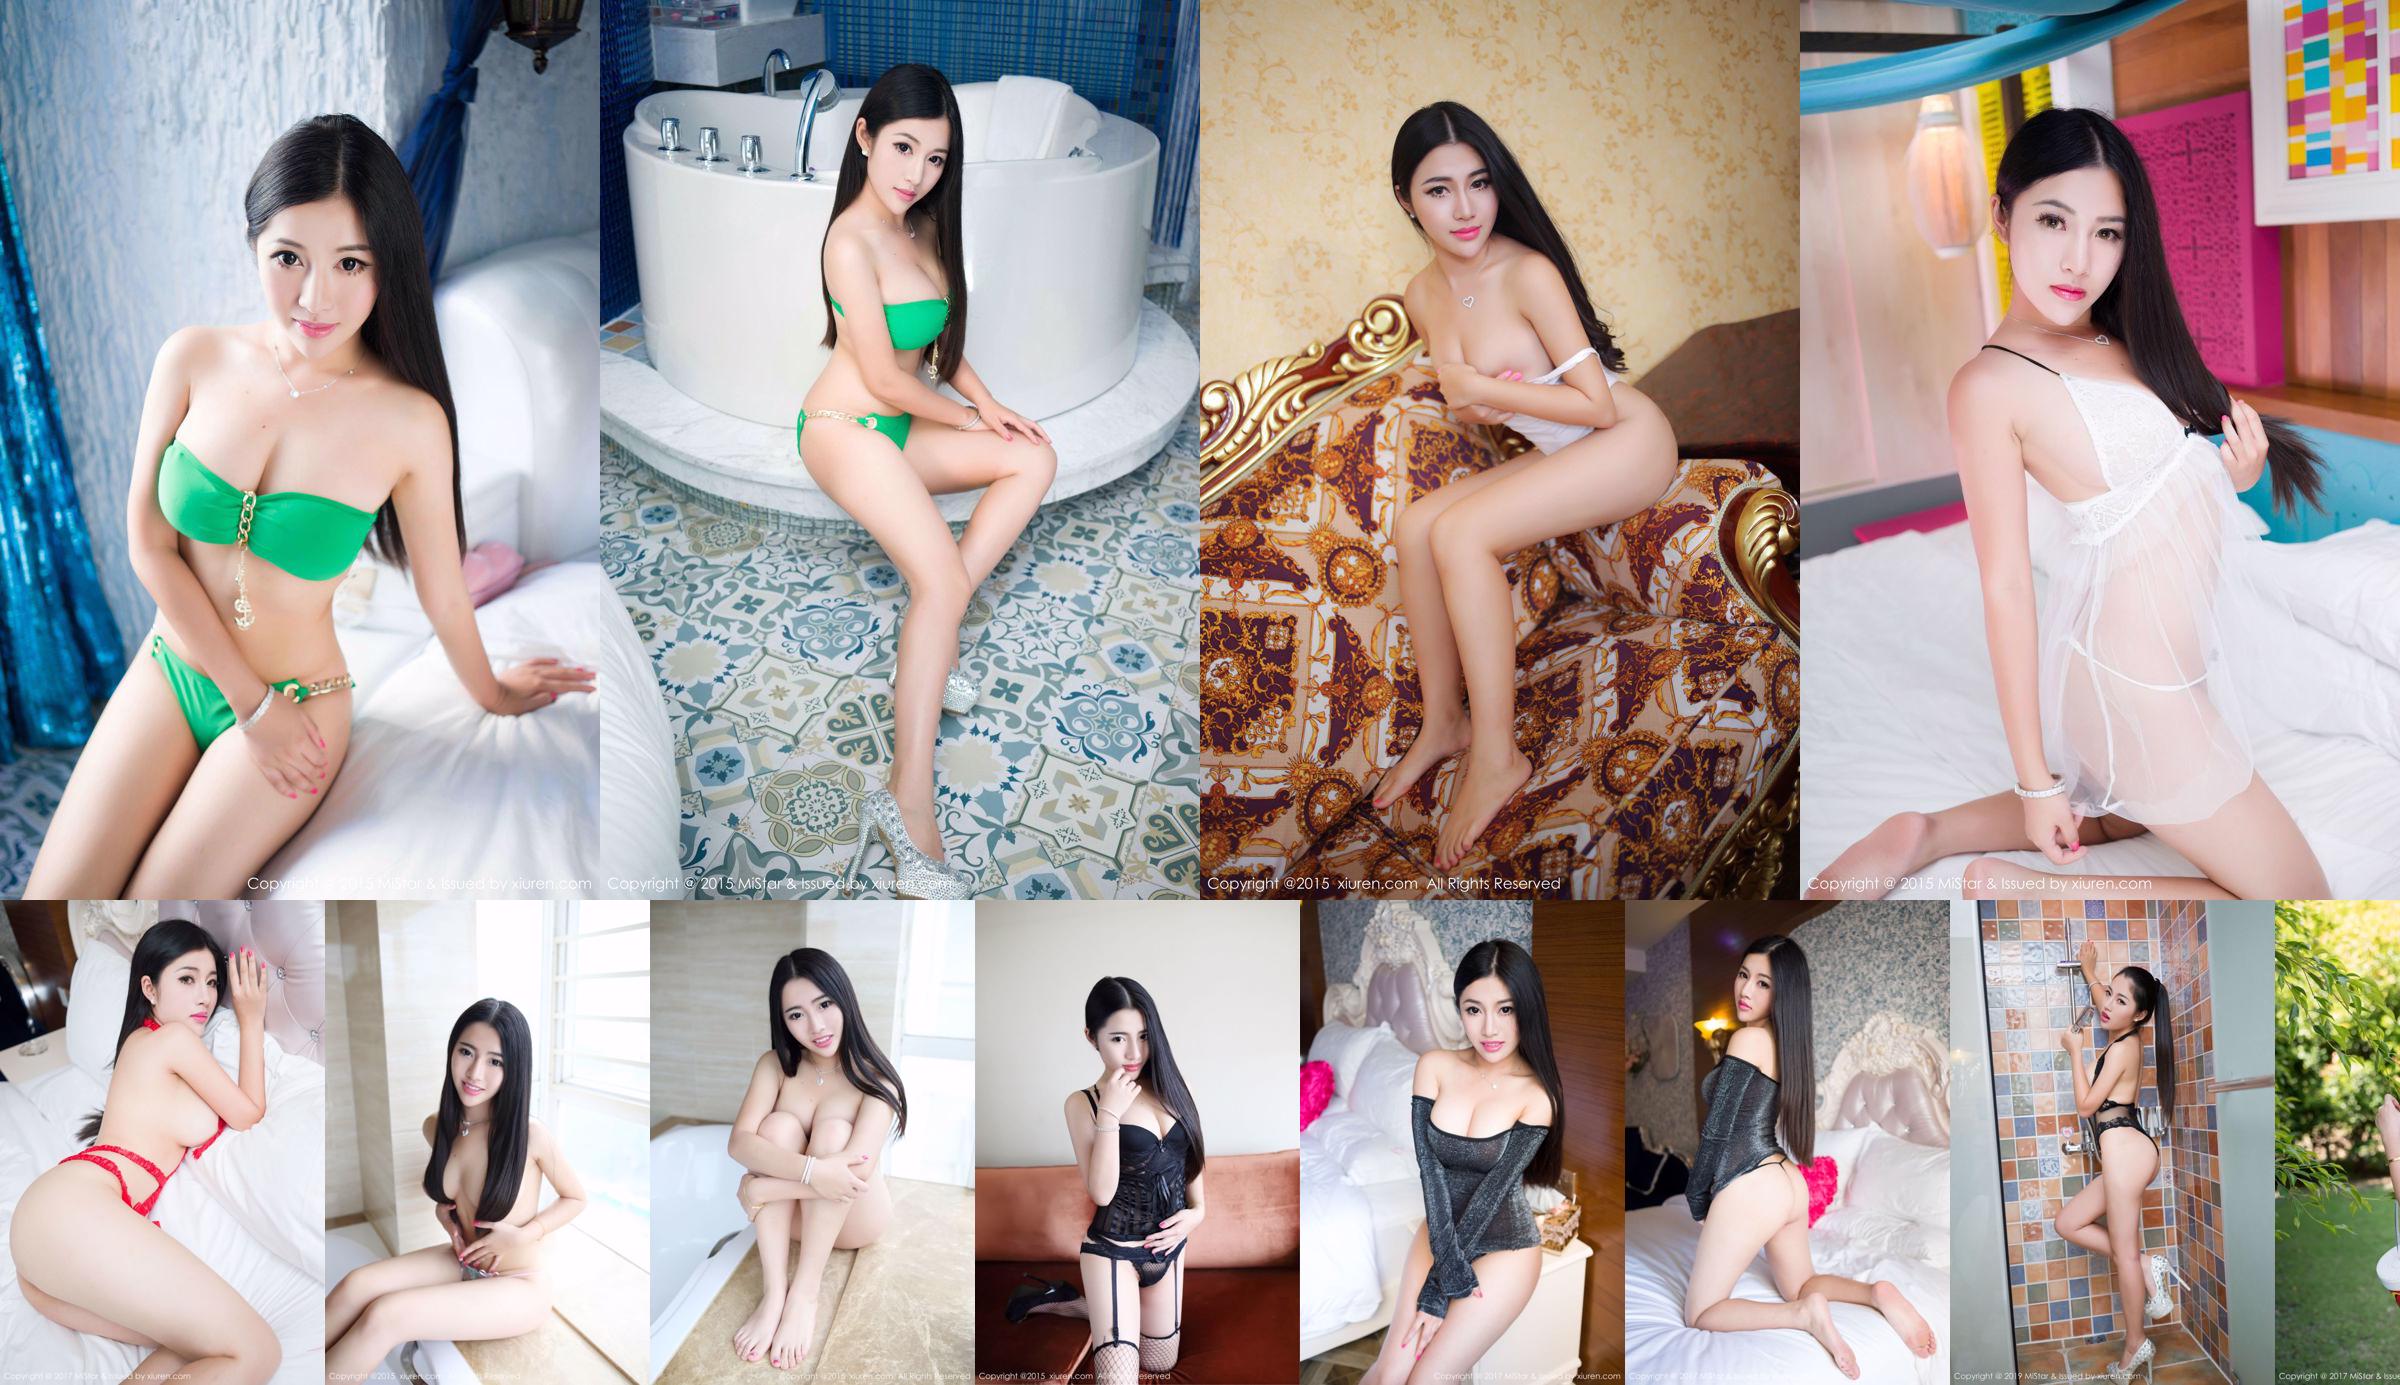 Beautiful breast teacher Jia Jia Tiffany-The temptation of white-collar OL, private bathroom photo [TGOD Push Goddess] No.09f3b3 Page 1